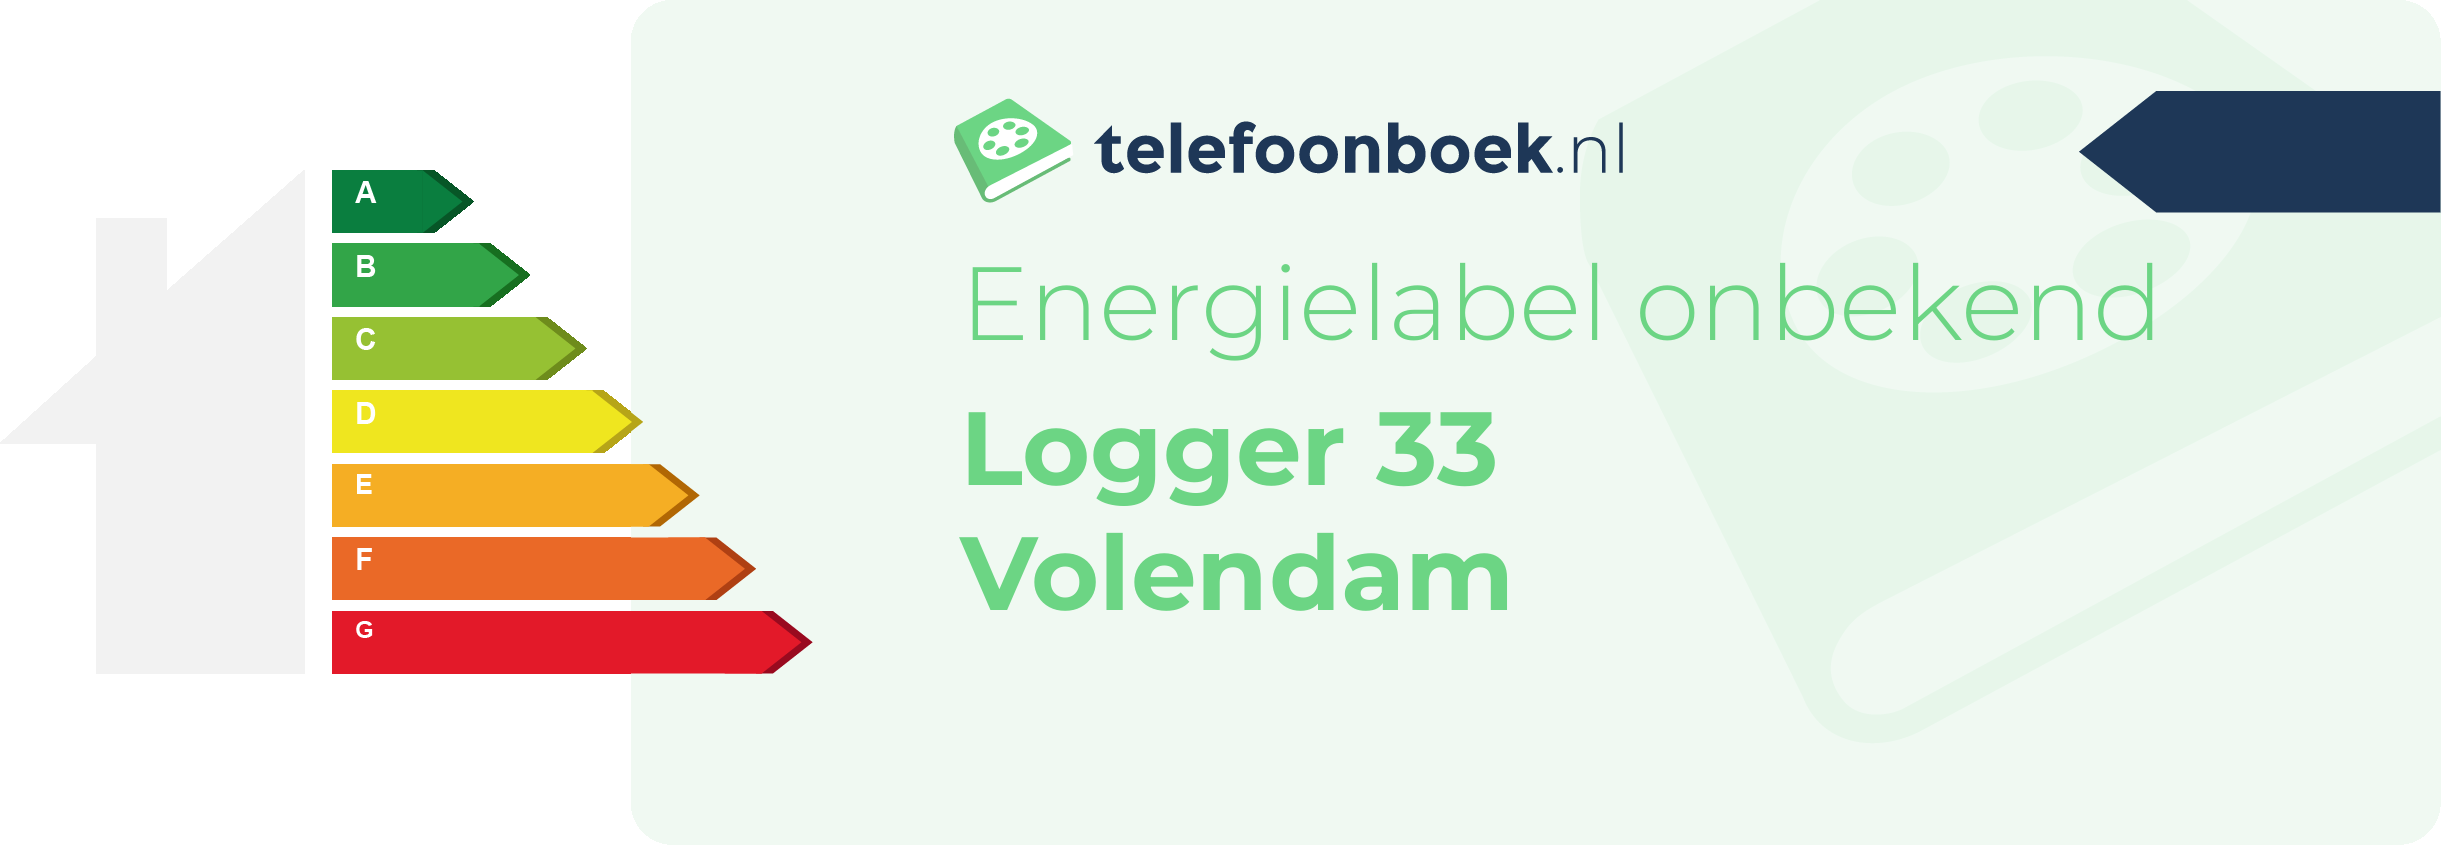 Energielabel Logger 33 Volendam